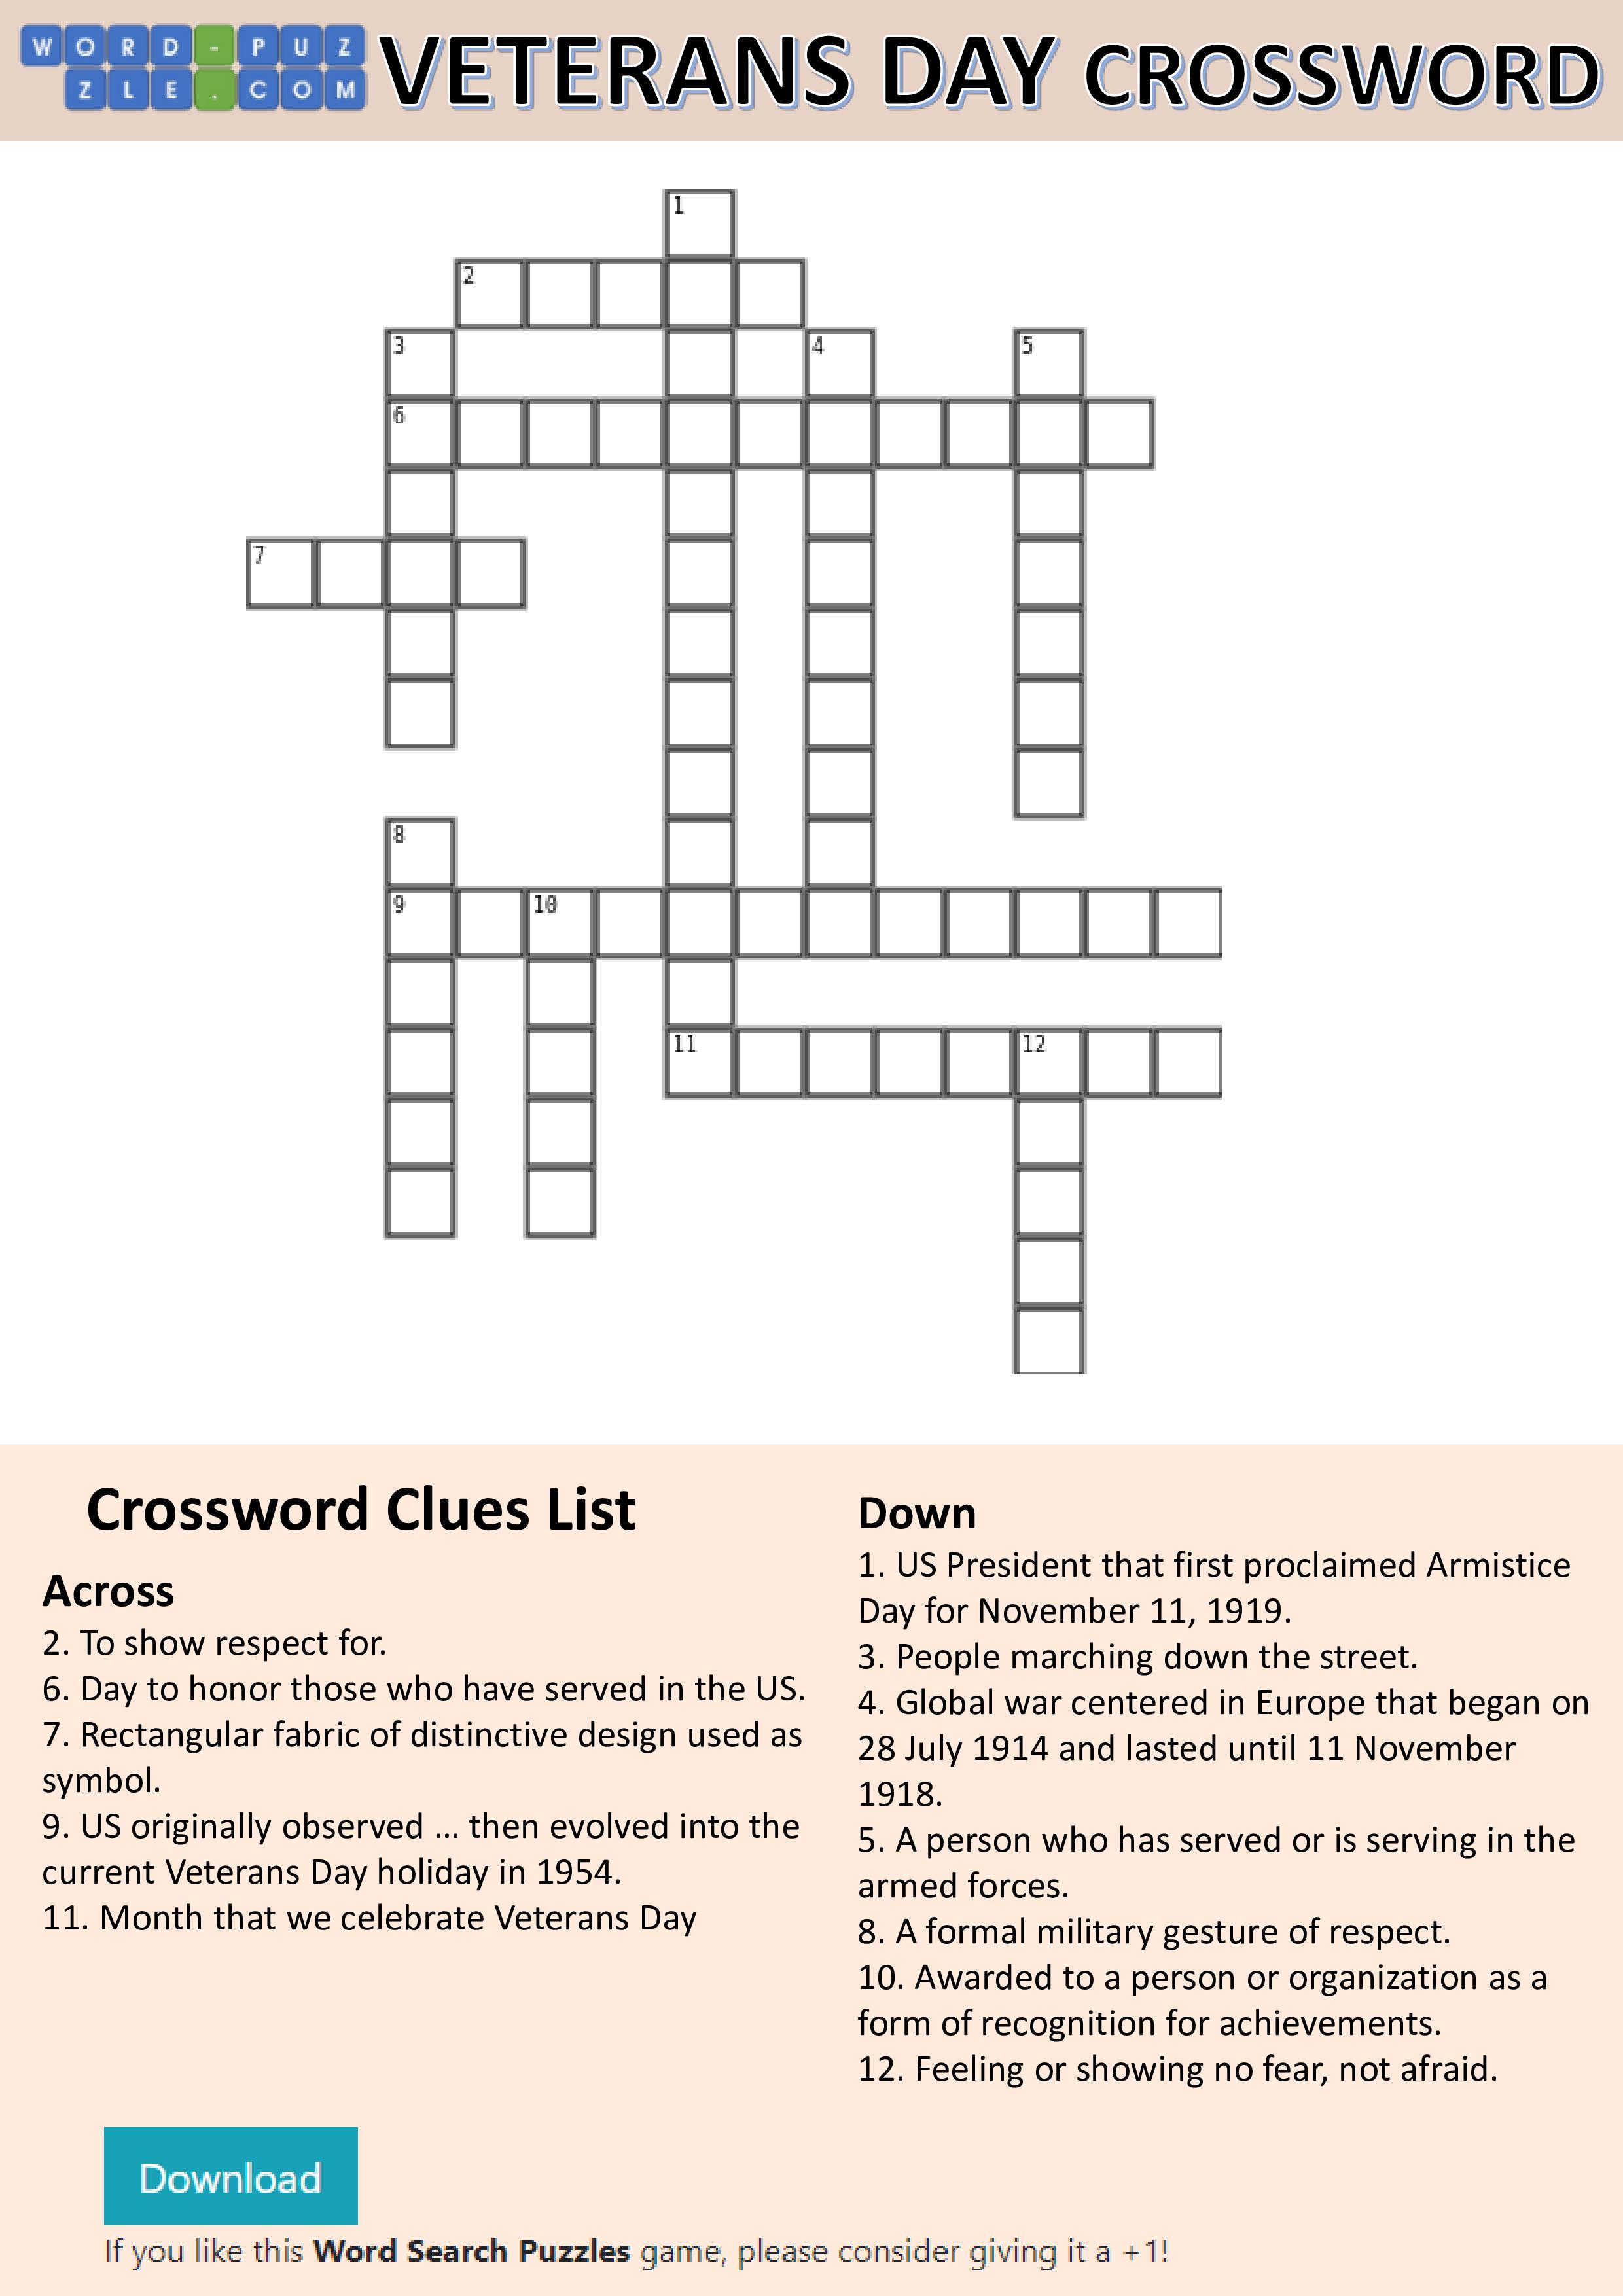 veterans-day-crossword-puzzle-templates-at-allbusinesstemplates